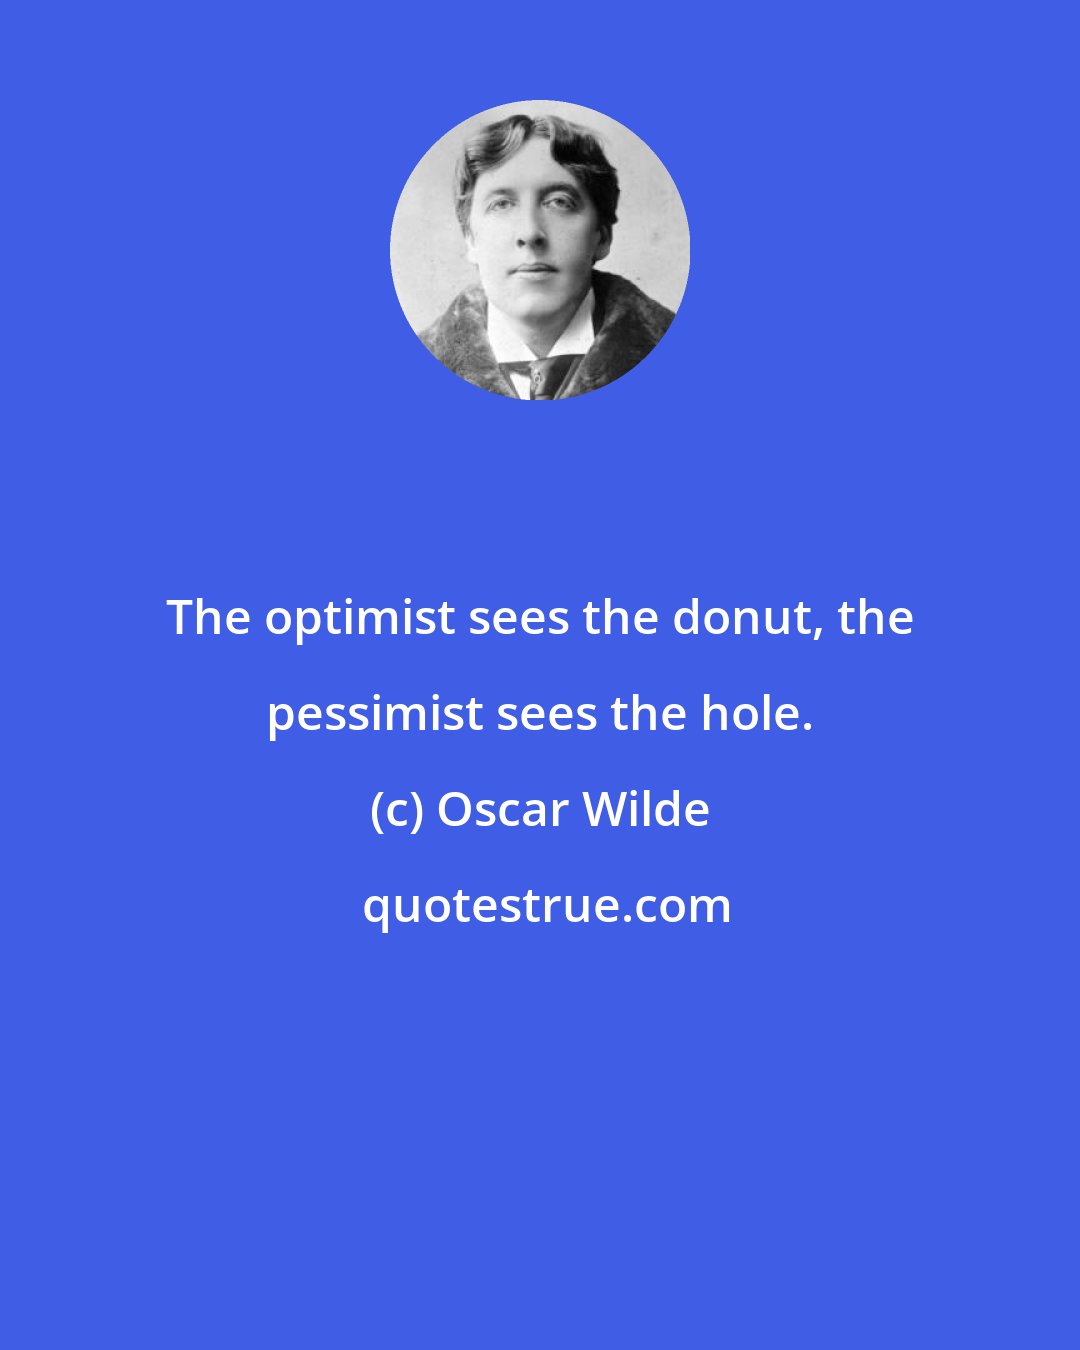 Oscar Wilde: The optimist sees the donut, the pessimist sees the hole.